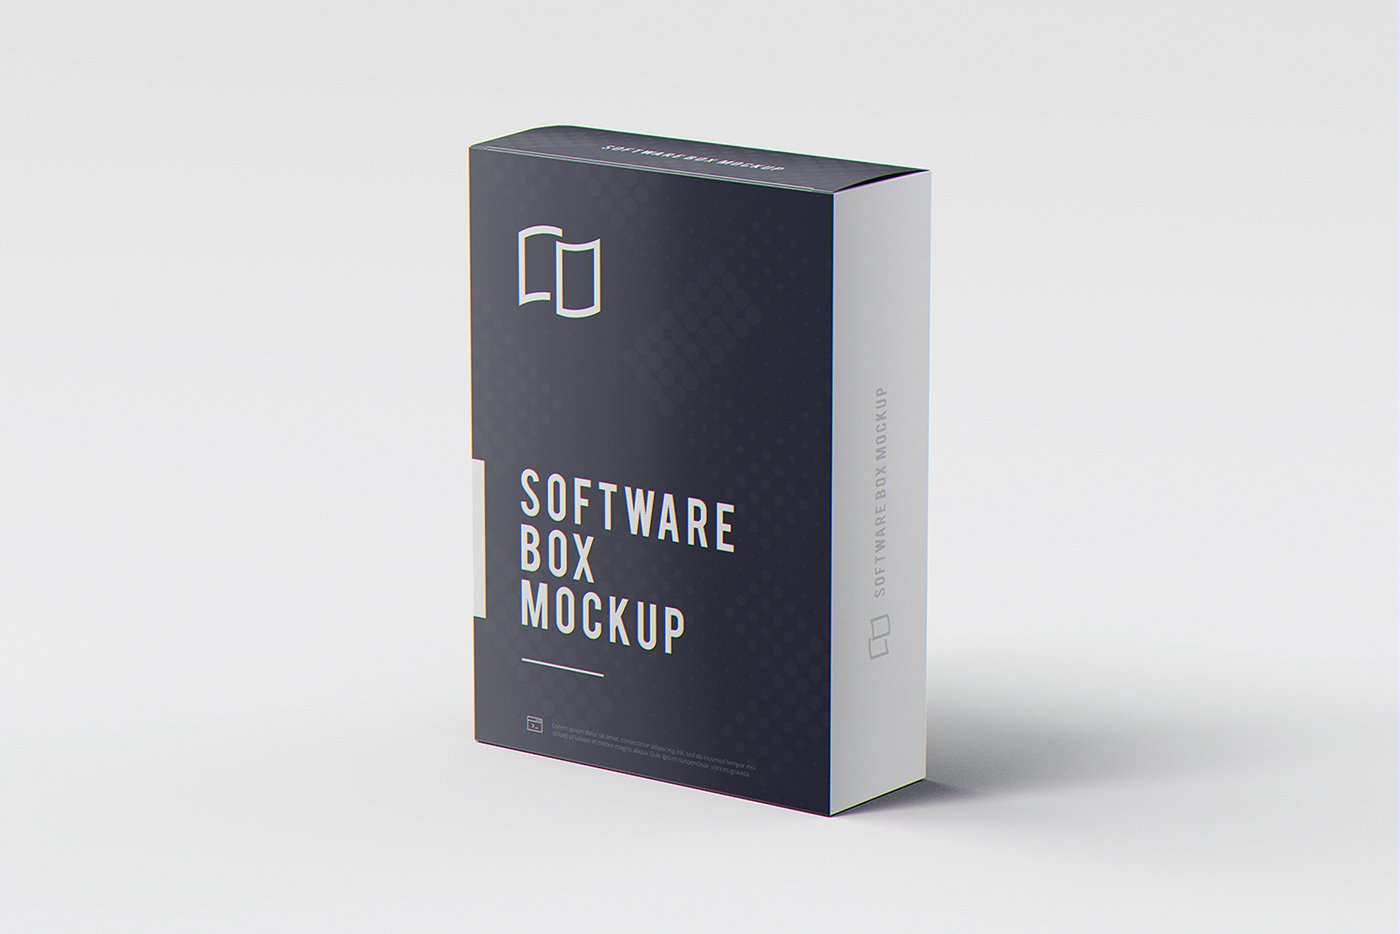 Software Box MockUp preview image.